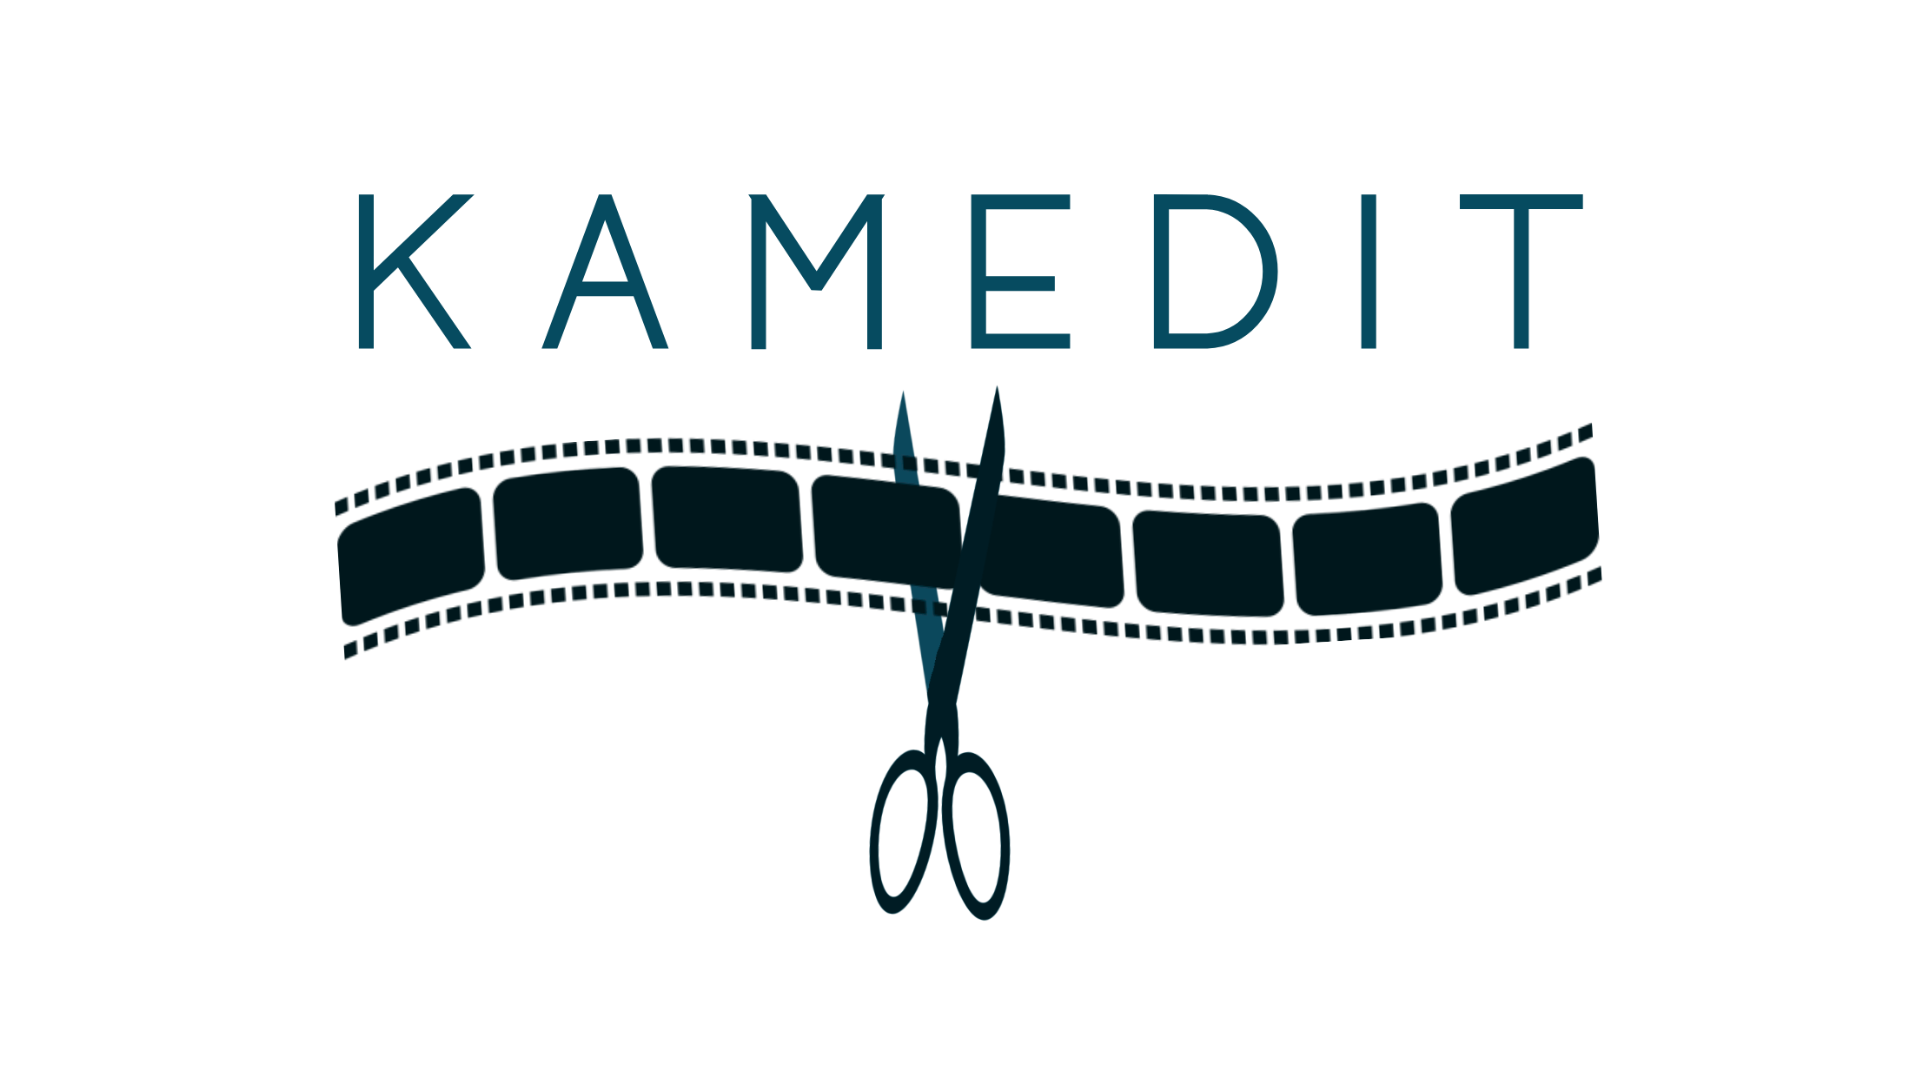 KAMEDIT (1920 x 1080 px) (1)